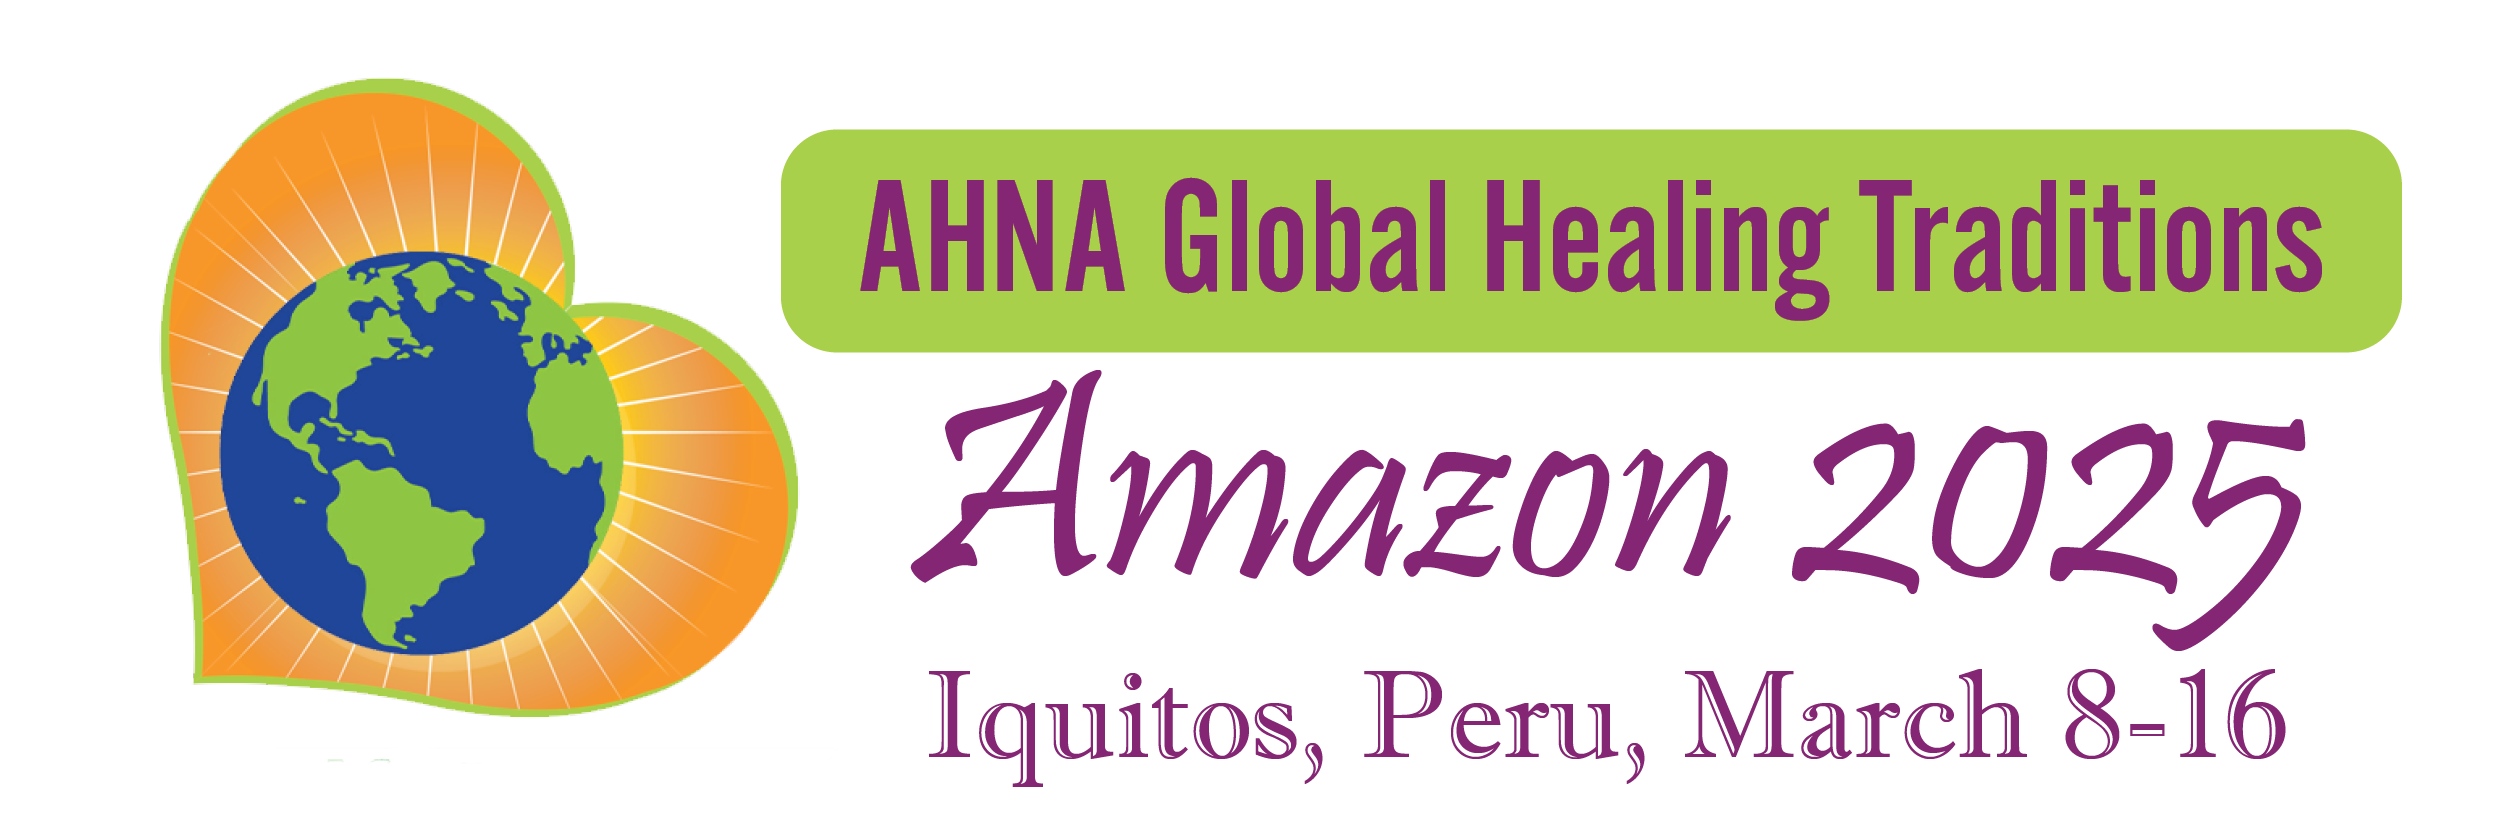 AHNA Global Healing Traditions Logo 2024638149207796935886